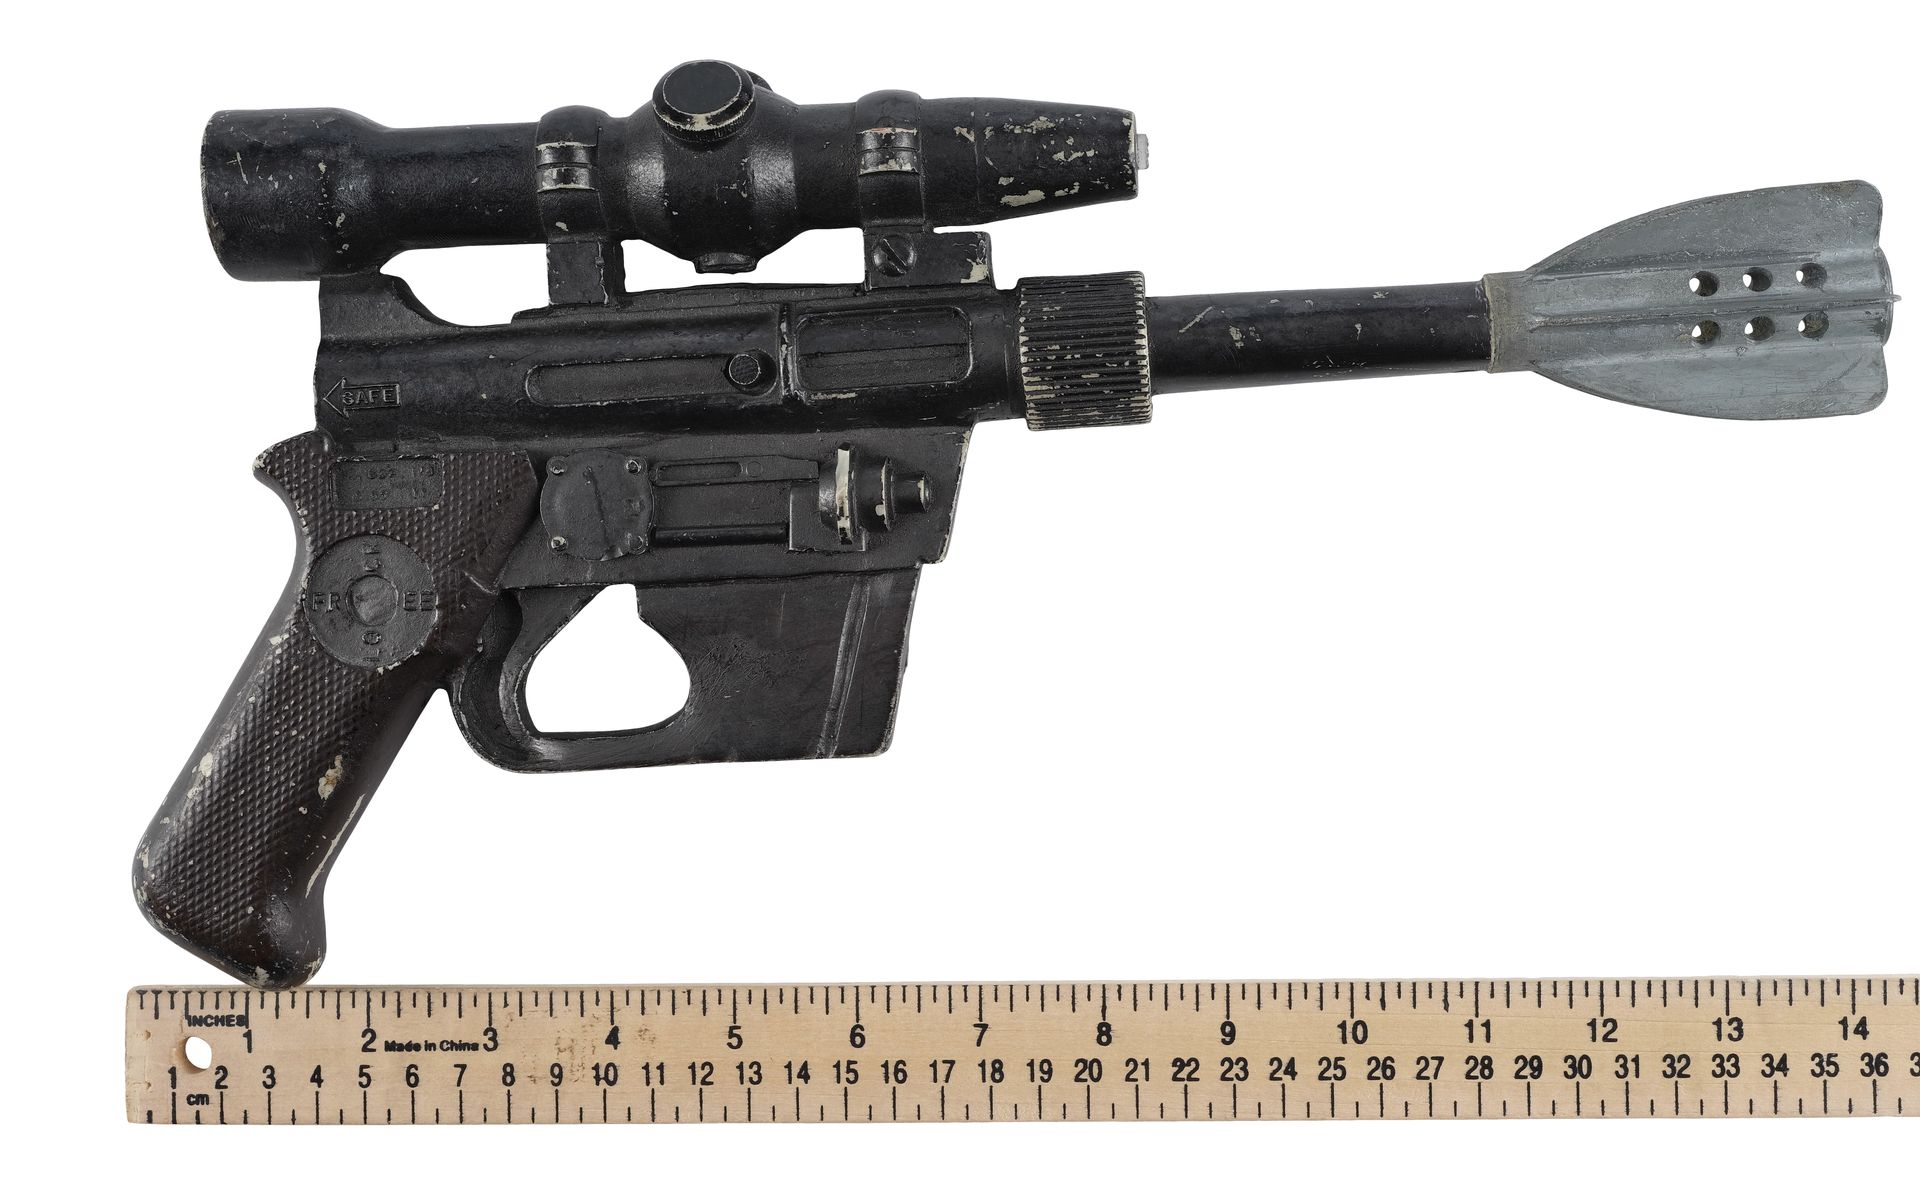 STAR WARS: THE EMPIRE STRIKES BACK (1980) - Hoth Rebel Trooper DL-21 Blaster Pistol - Image 10 of 10